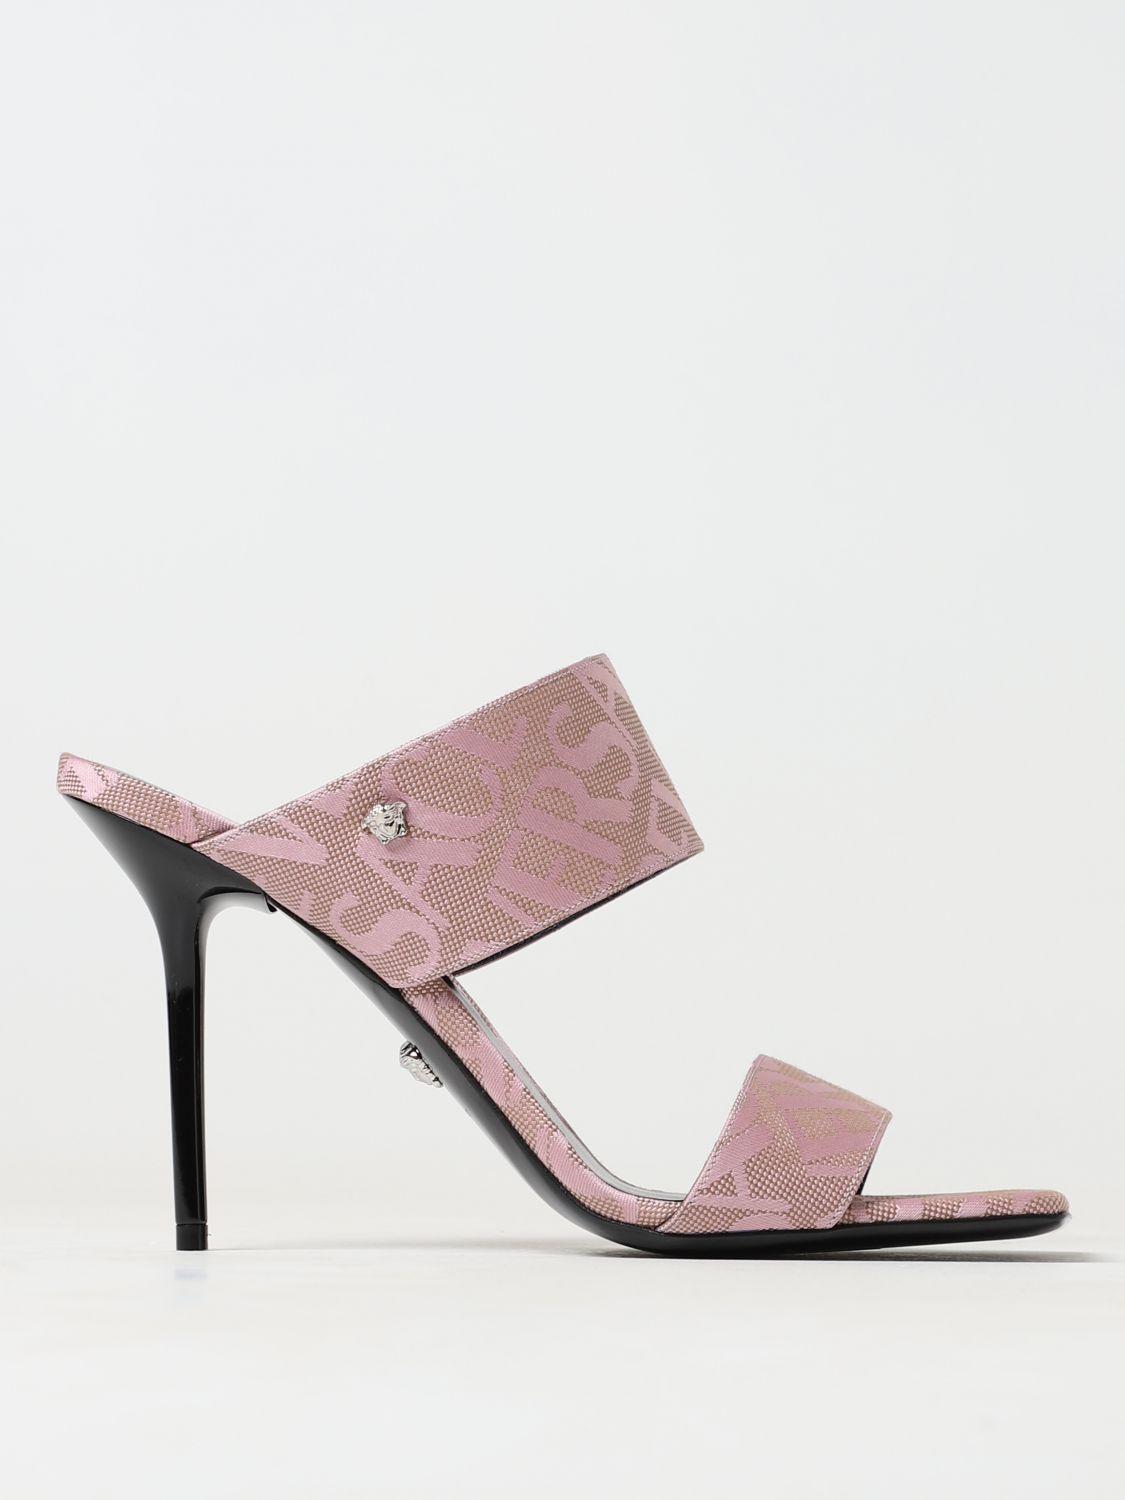 Medusa aevitas cloth heels Versace Pink size 38.5 IT in Fabric